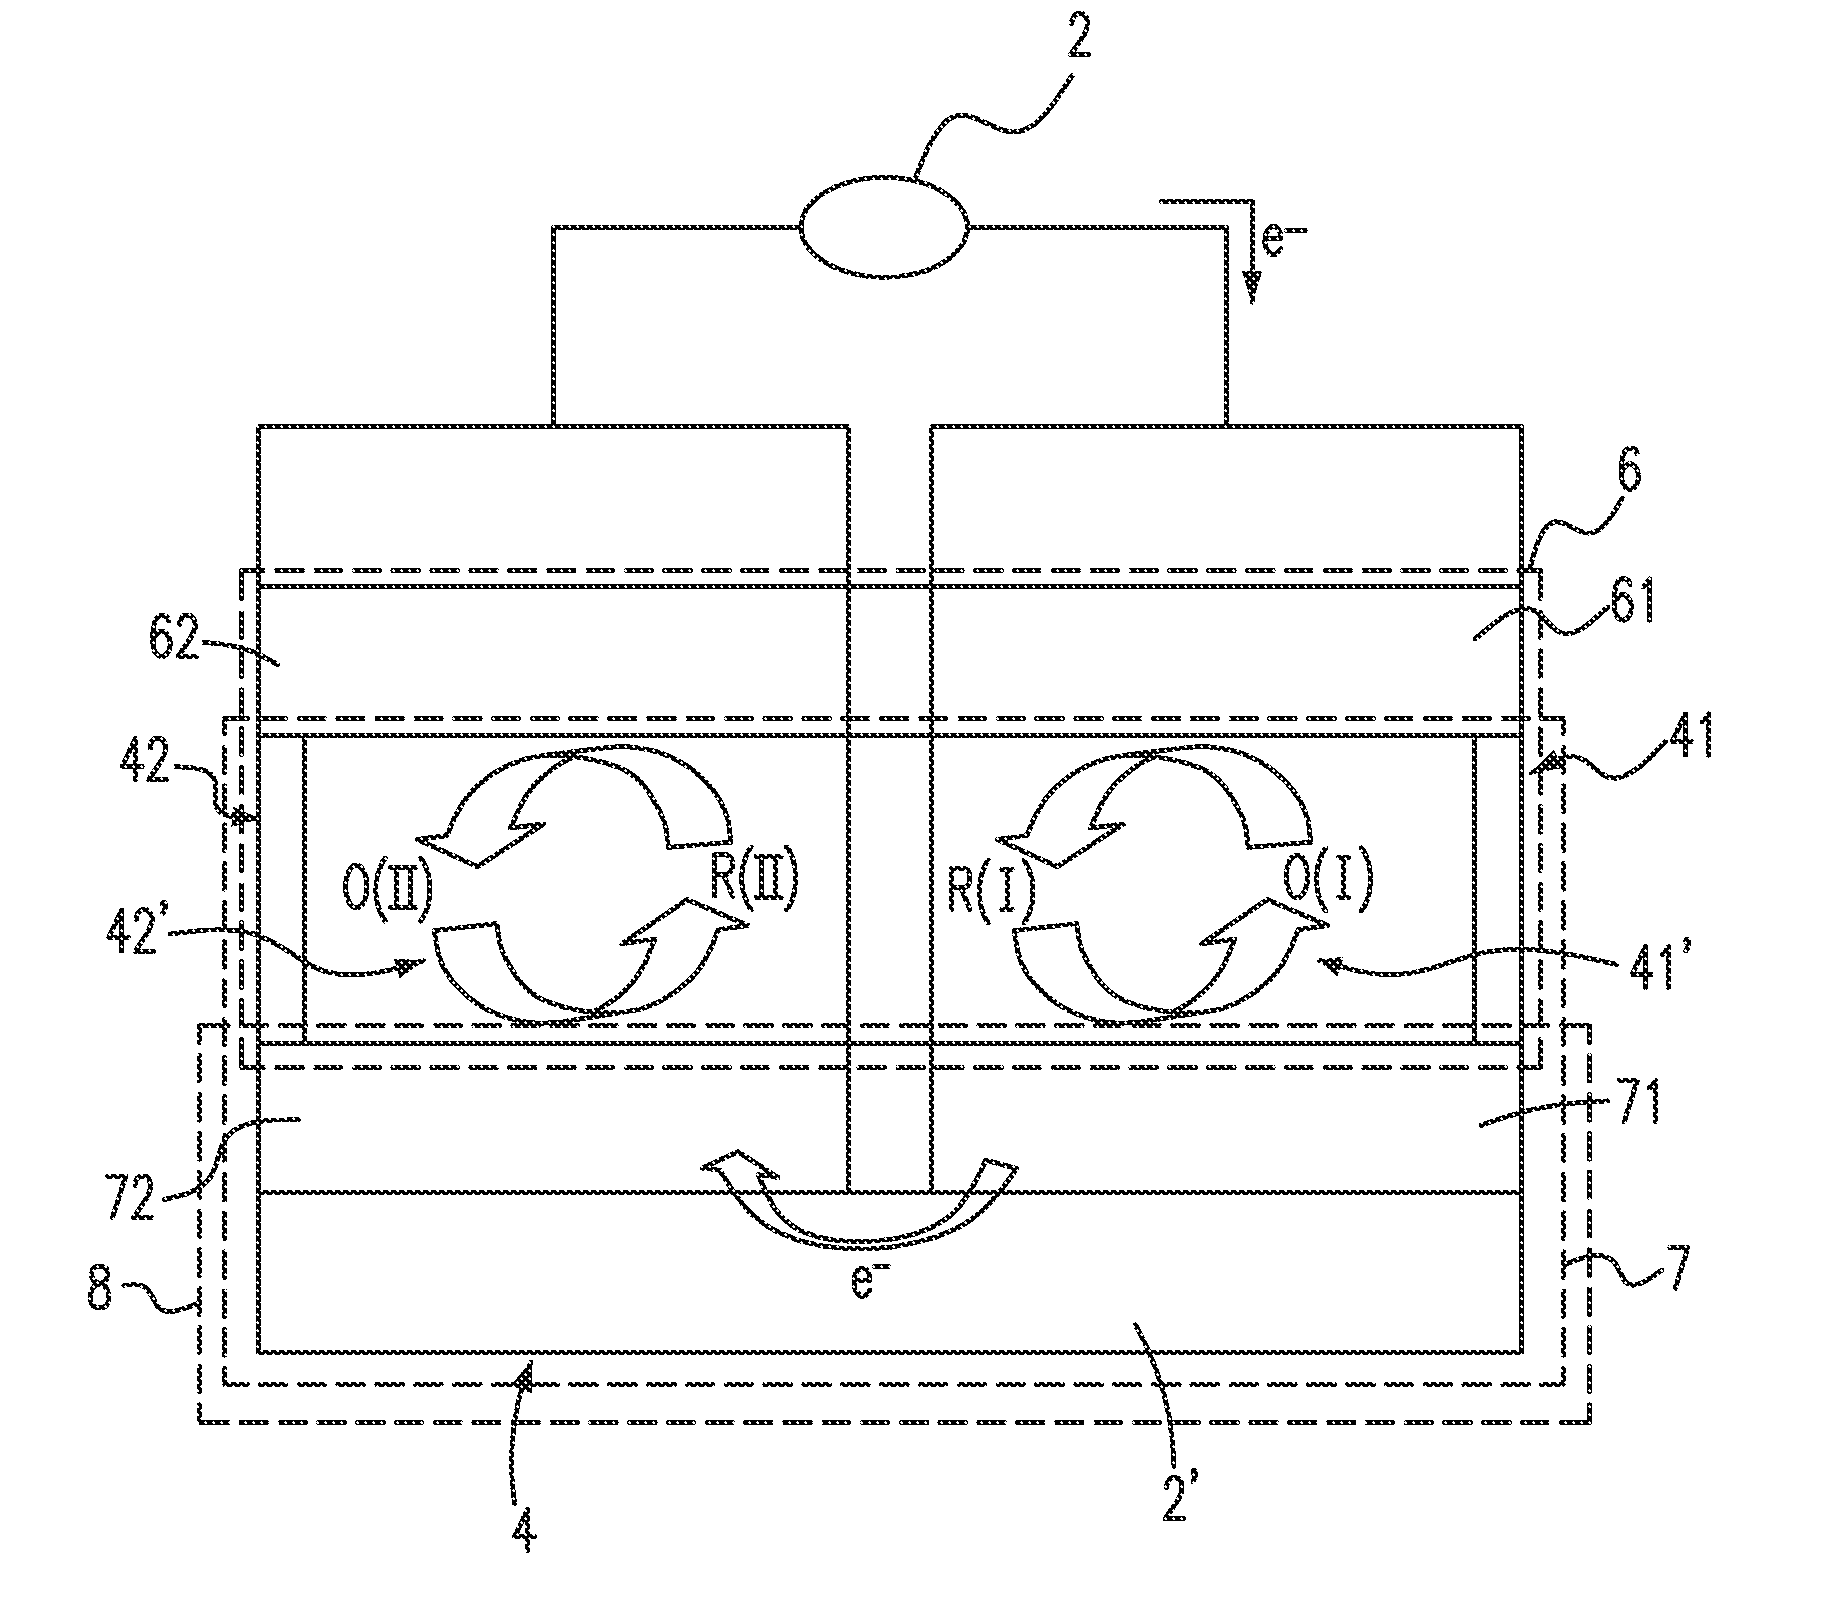 Mediator-type photocell system